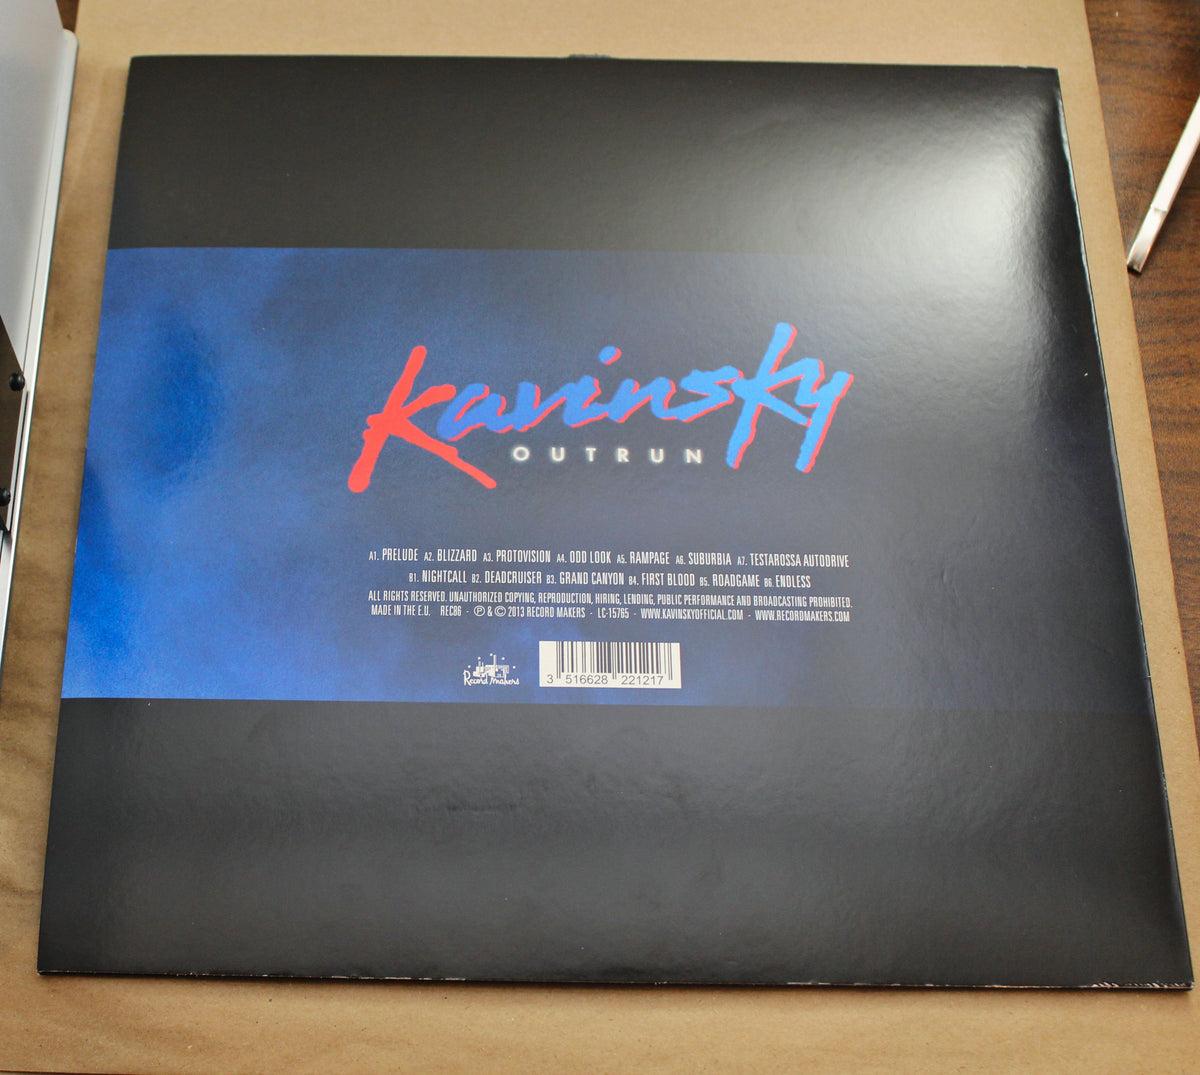 Kavinsky on Vinyl Finally Arrived - Merry Christmas to Myself : r/outrun